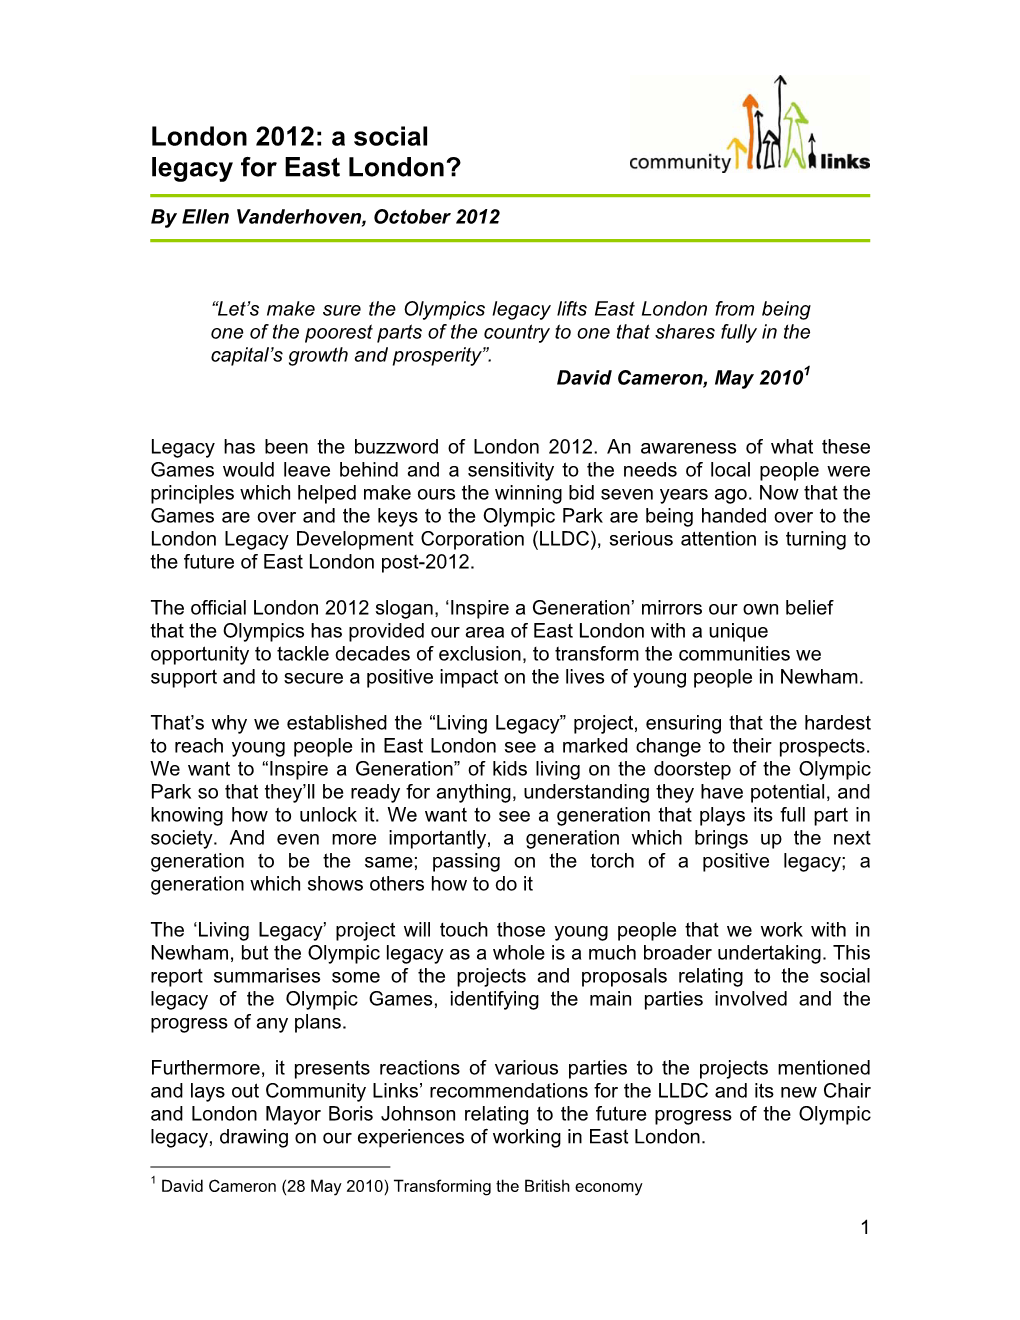 London 2012: a Social Legacy for East London?